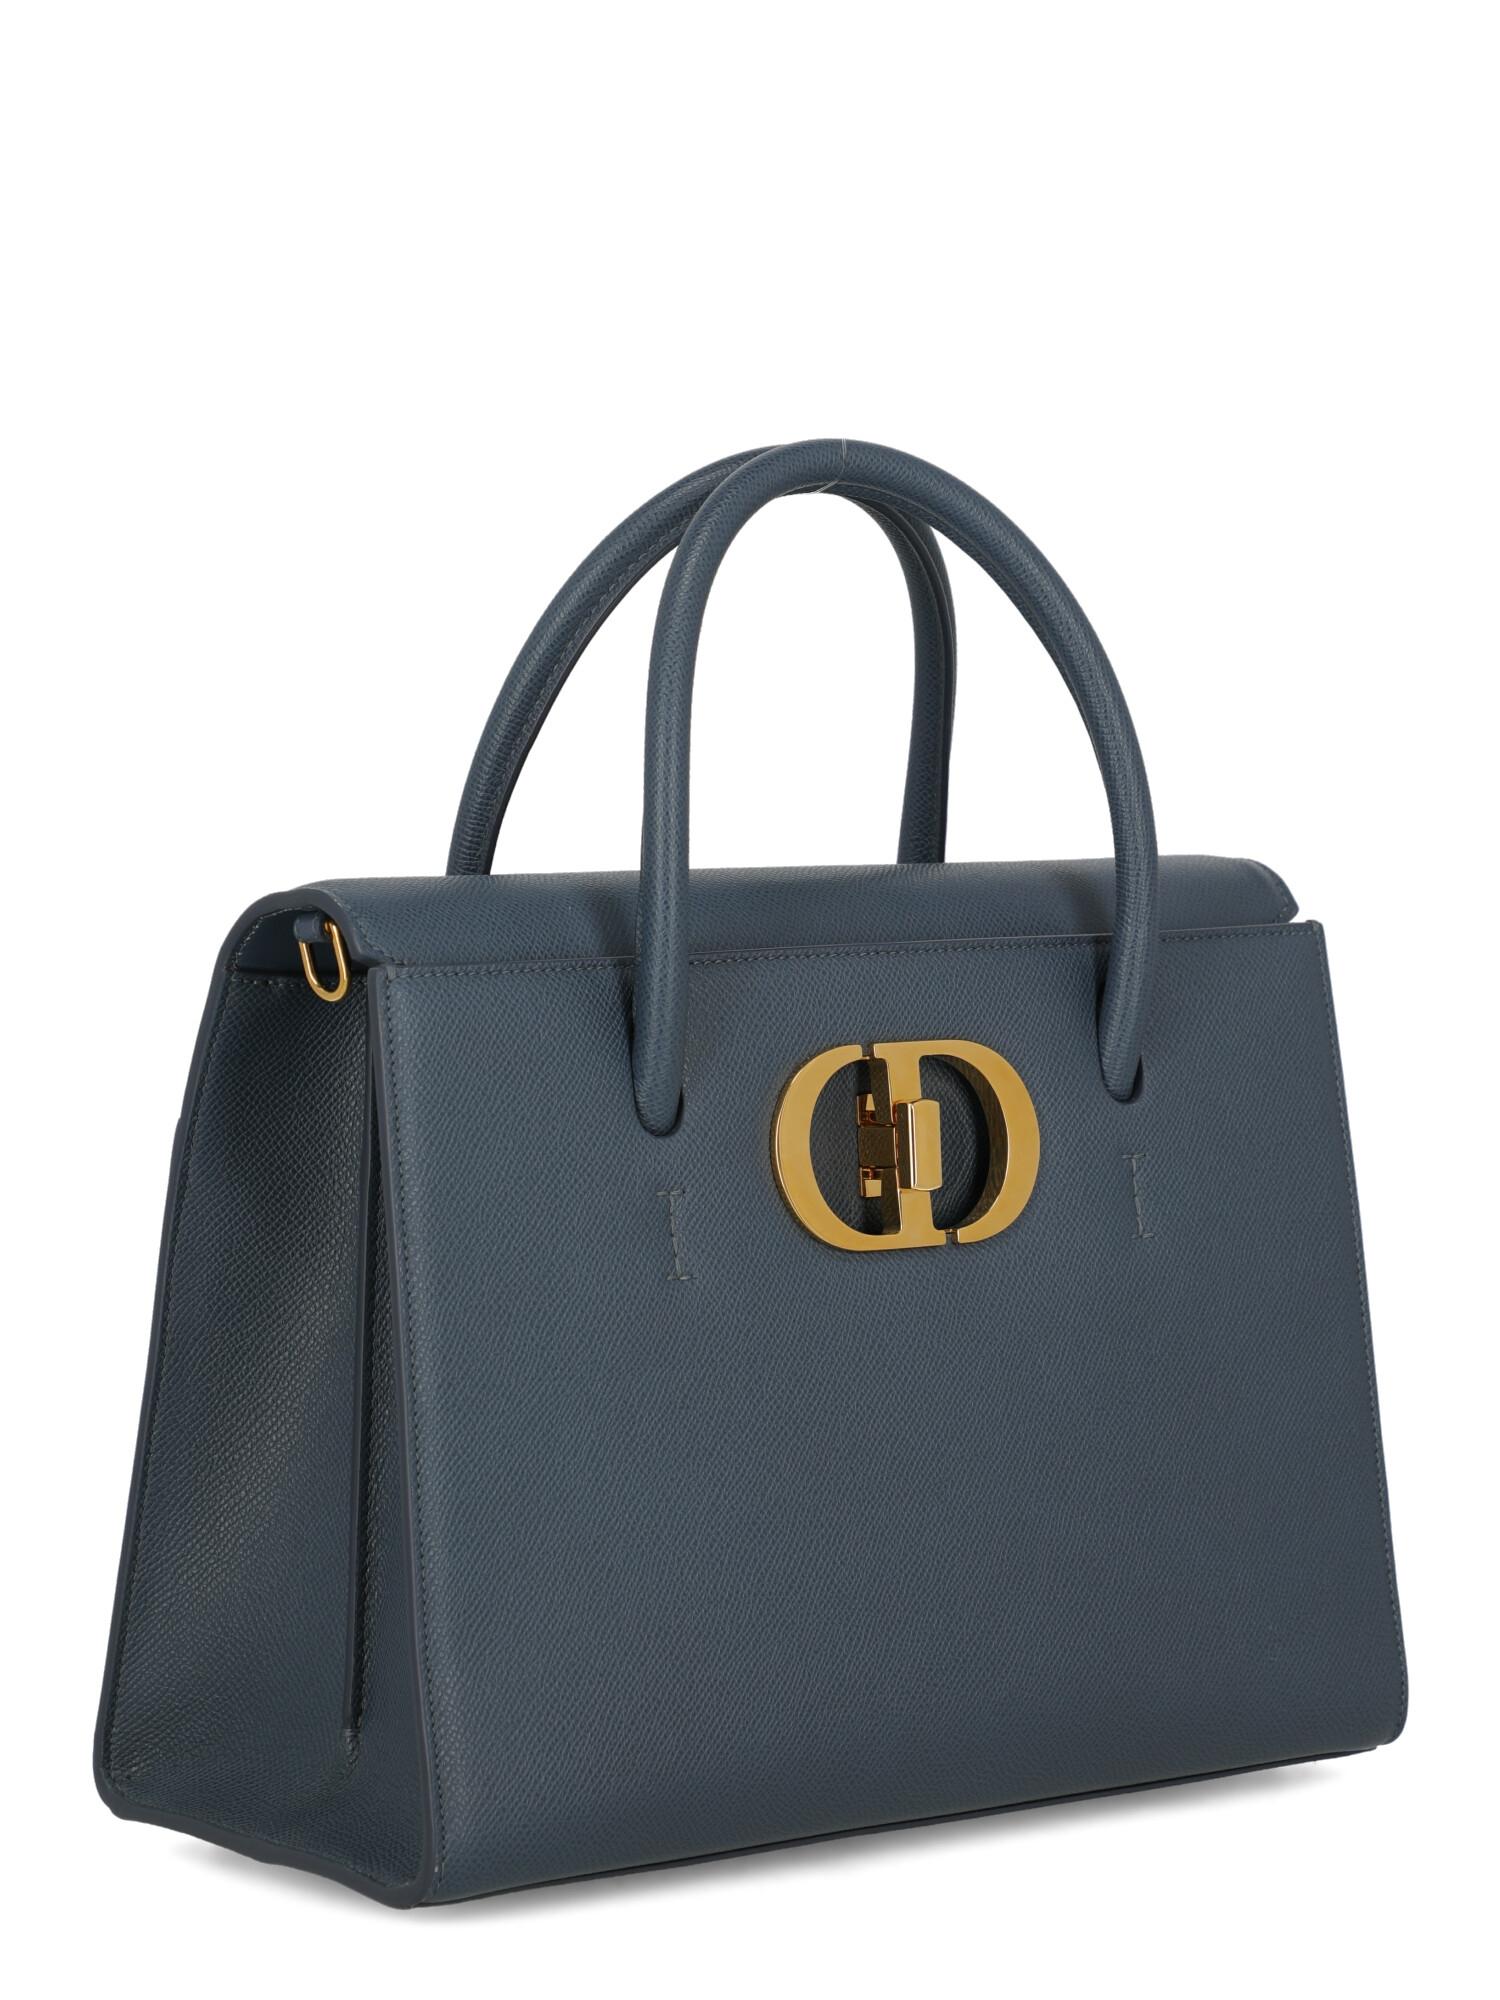 Black Dior Women's Handbag Navy St. Honorè Leather